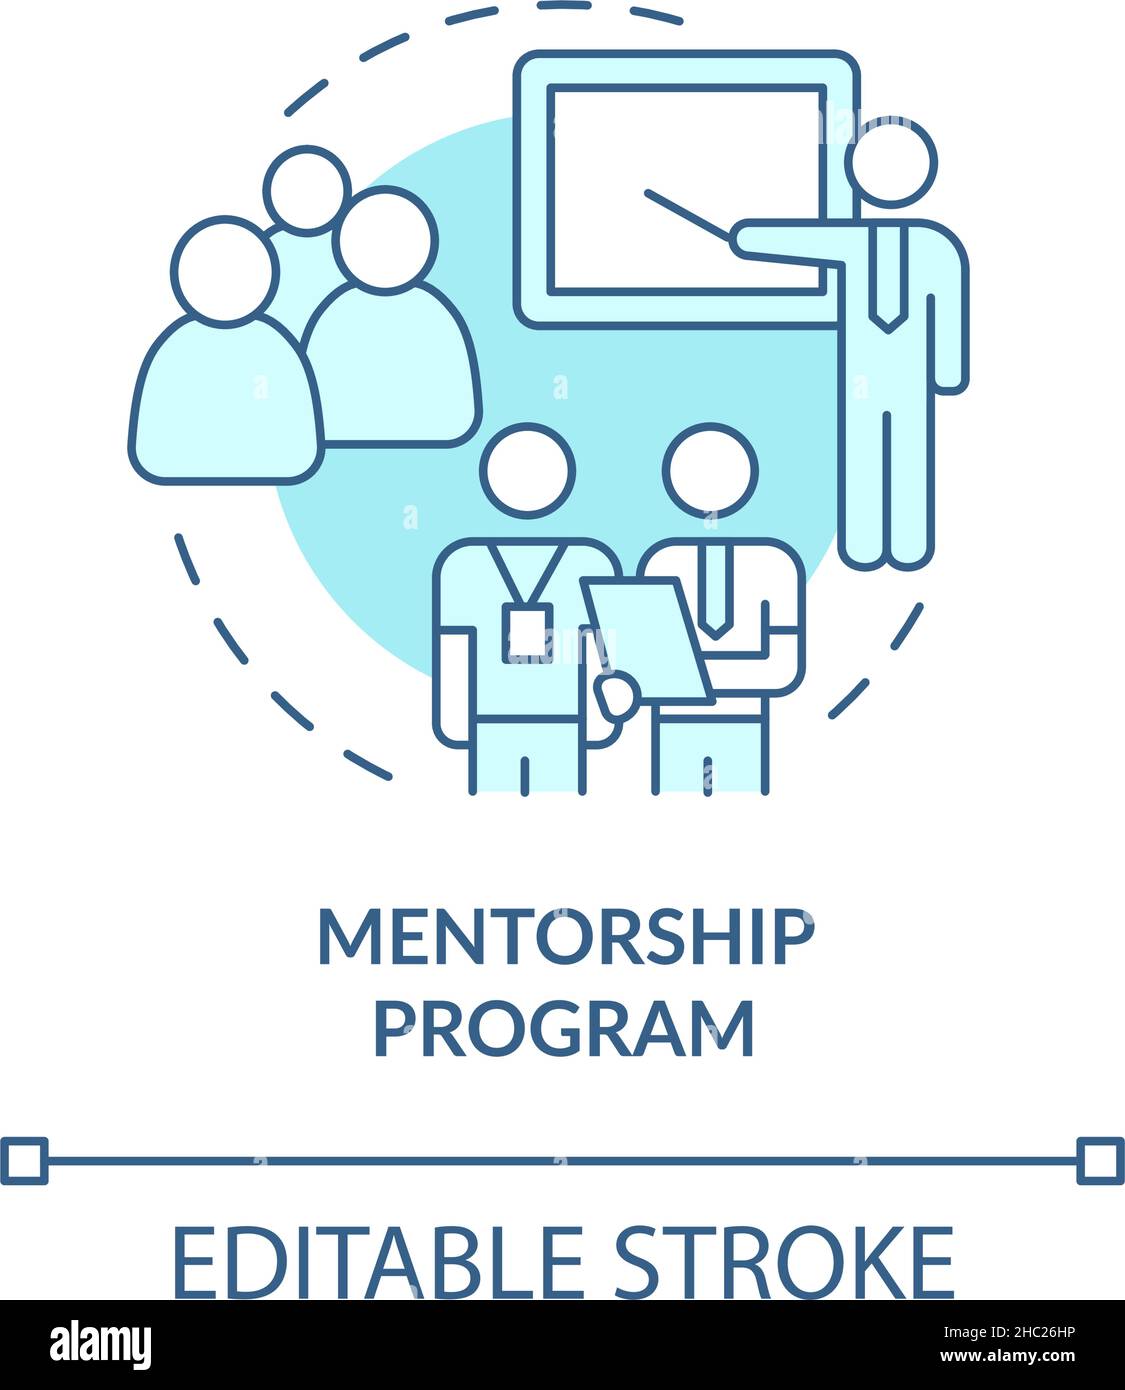 Mentorship program turquoise concept icon Stock Vector